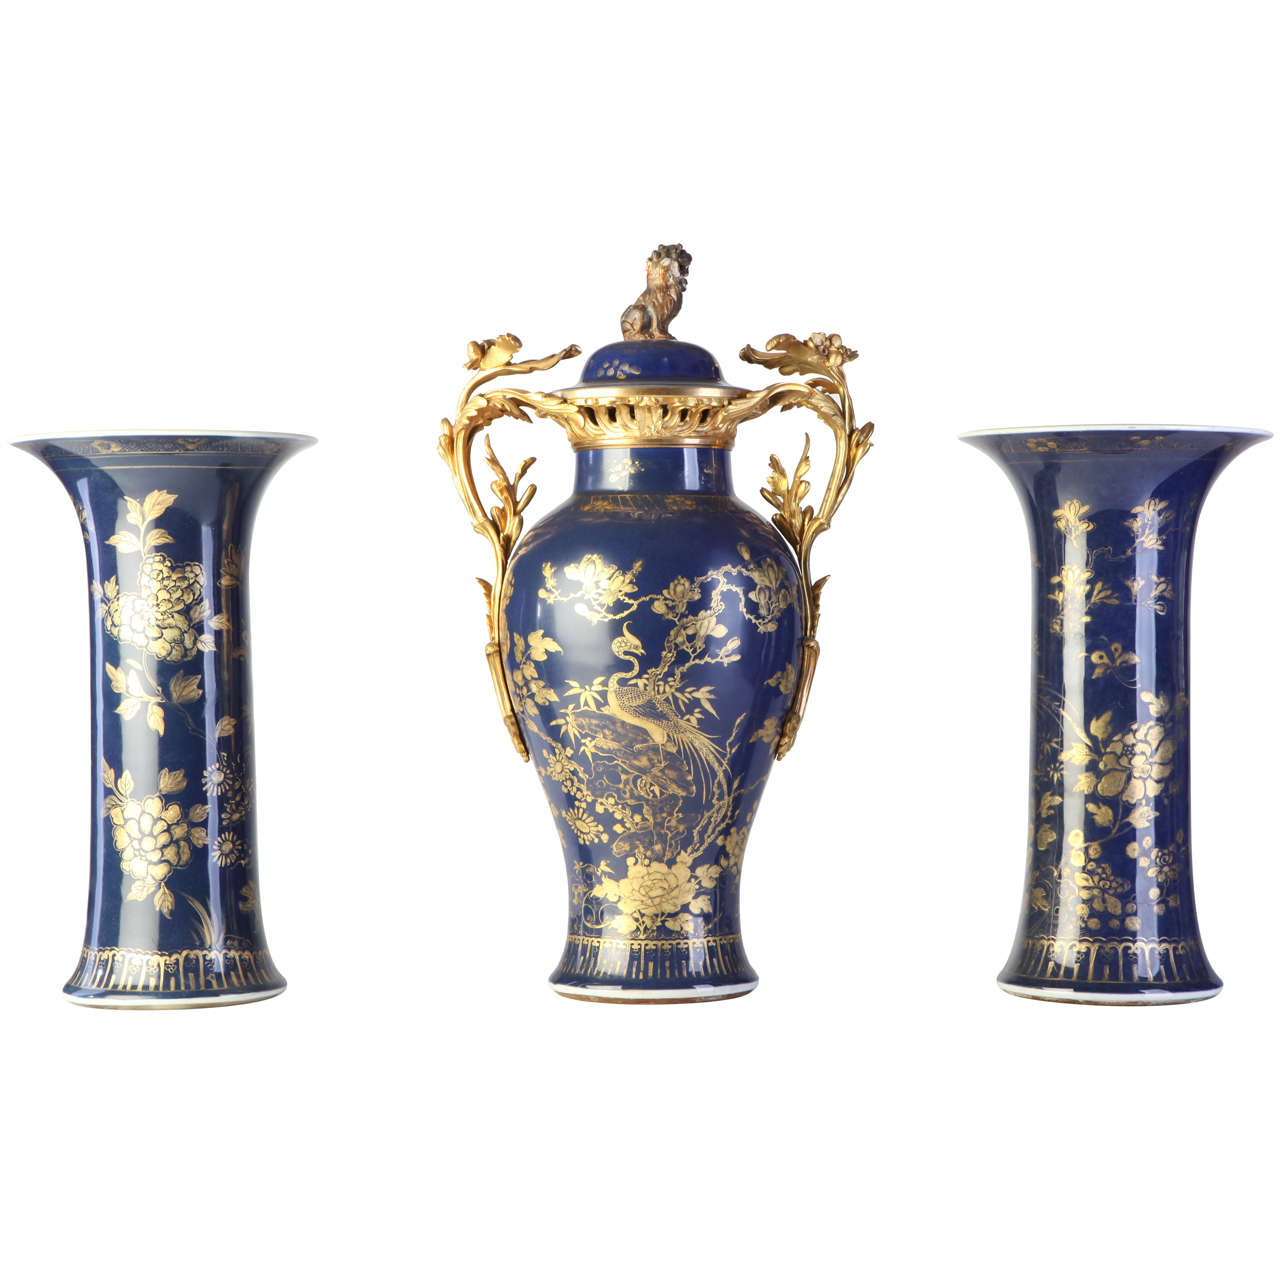 Set of Three 18th century Chinese Powder Blue Gilt-Decorated Vases